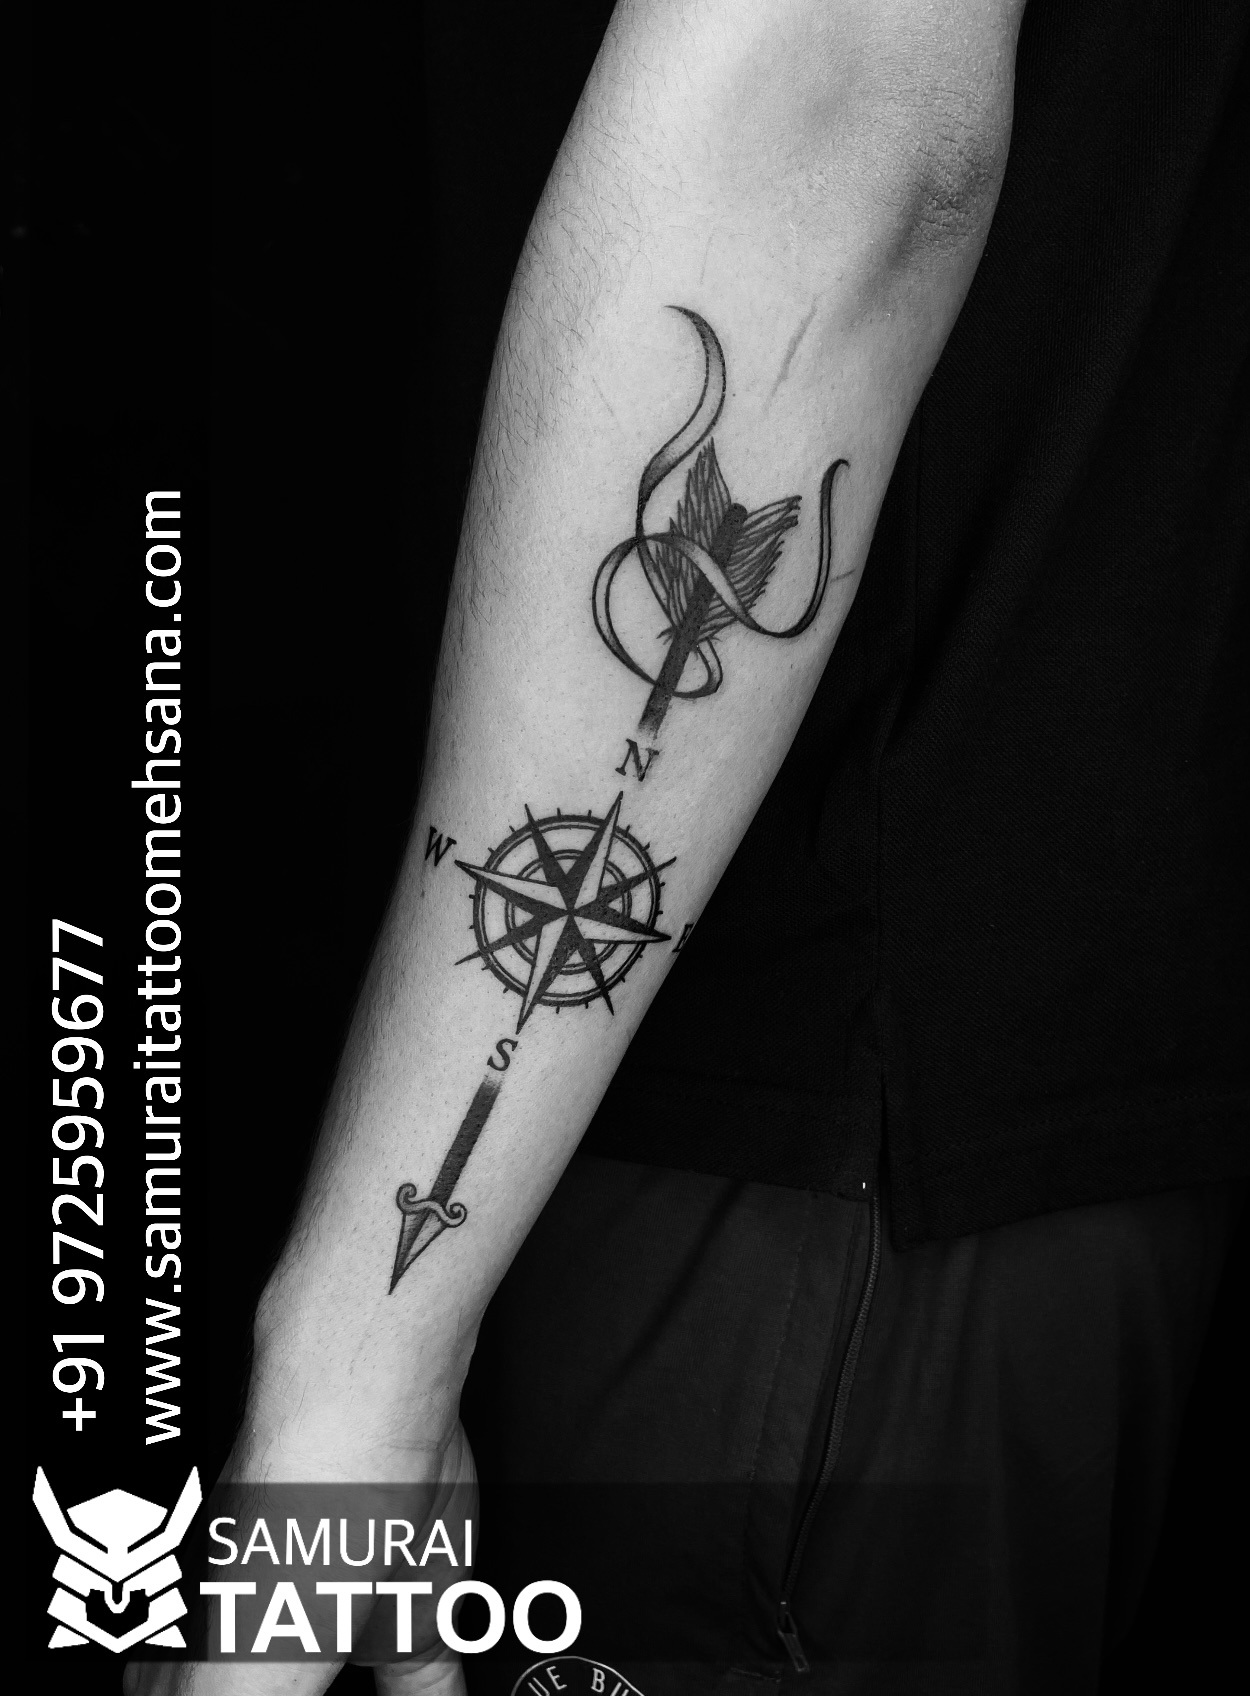 Minimal Vintage Compass Tattoo Design - Tattapic®